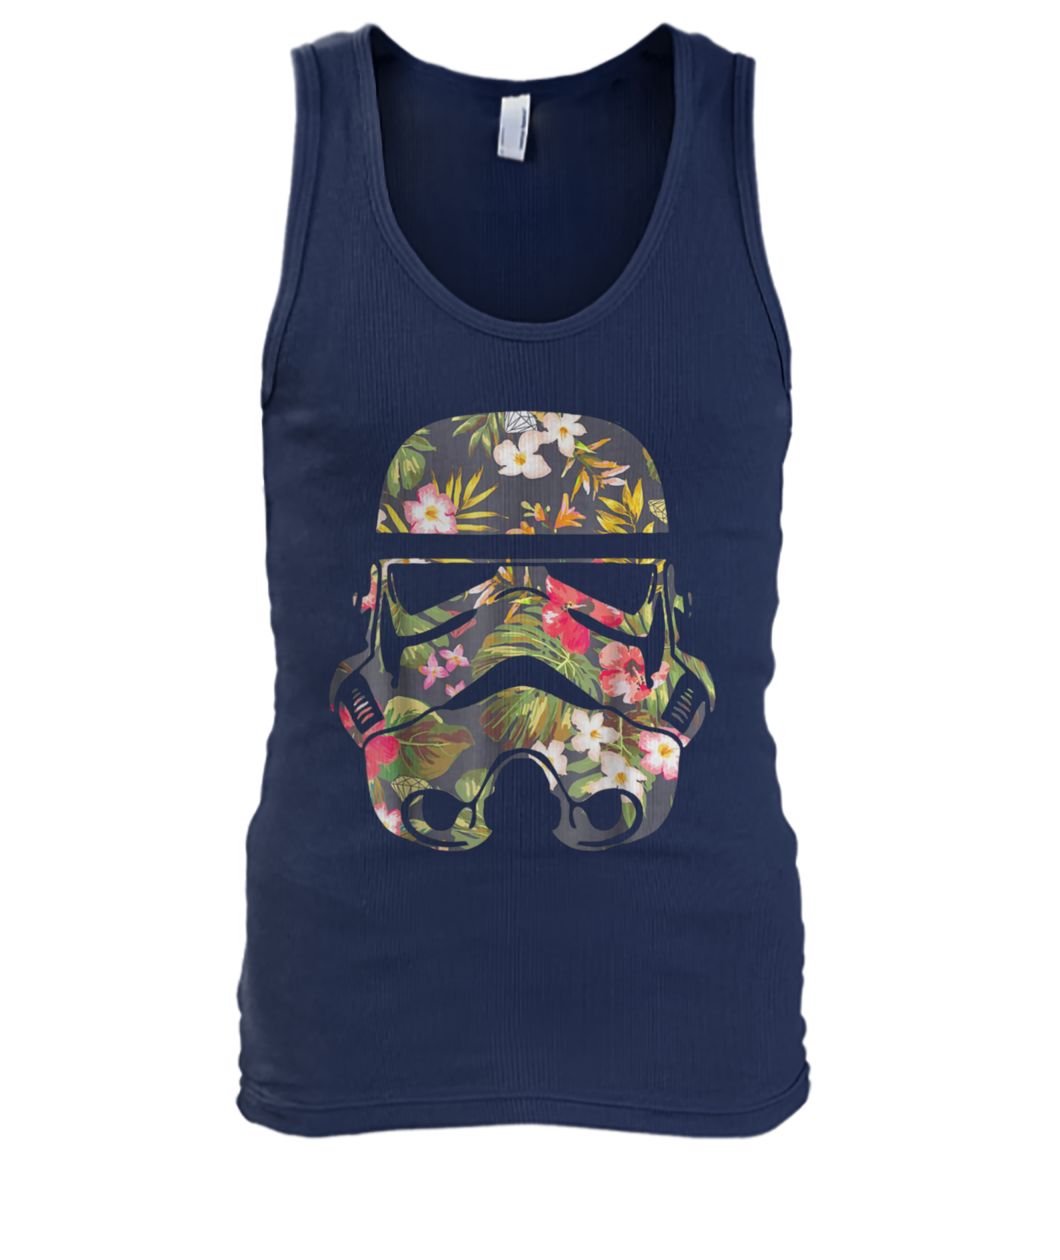 Star wars tropical stormtrooper floral print graphic men's tank top